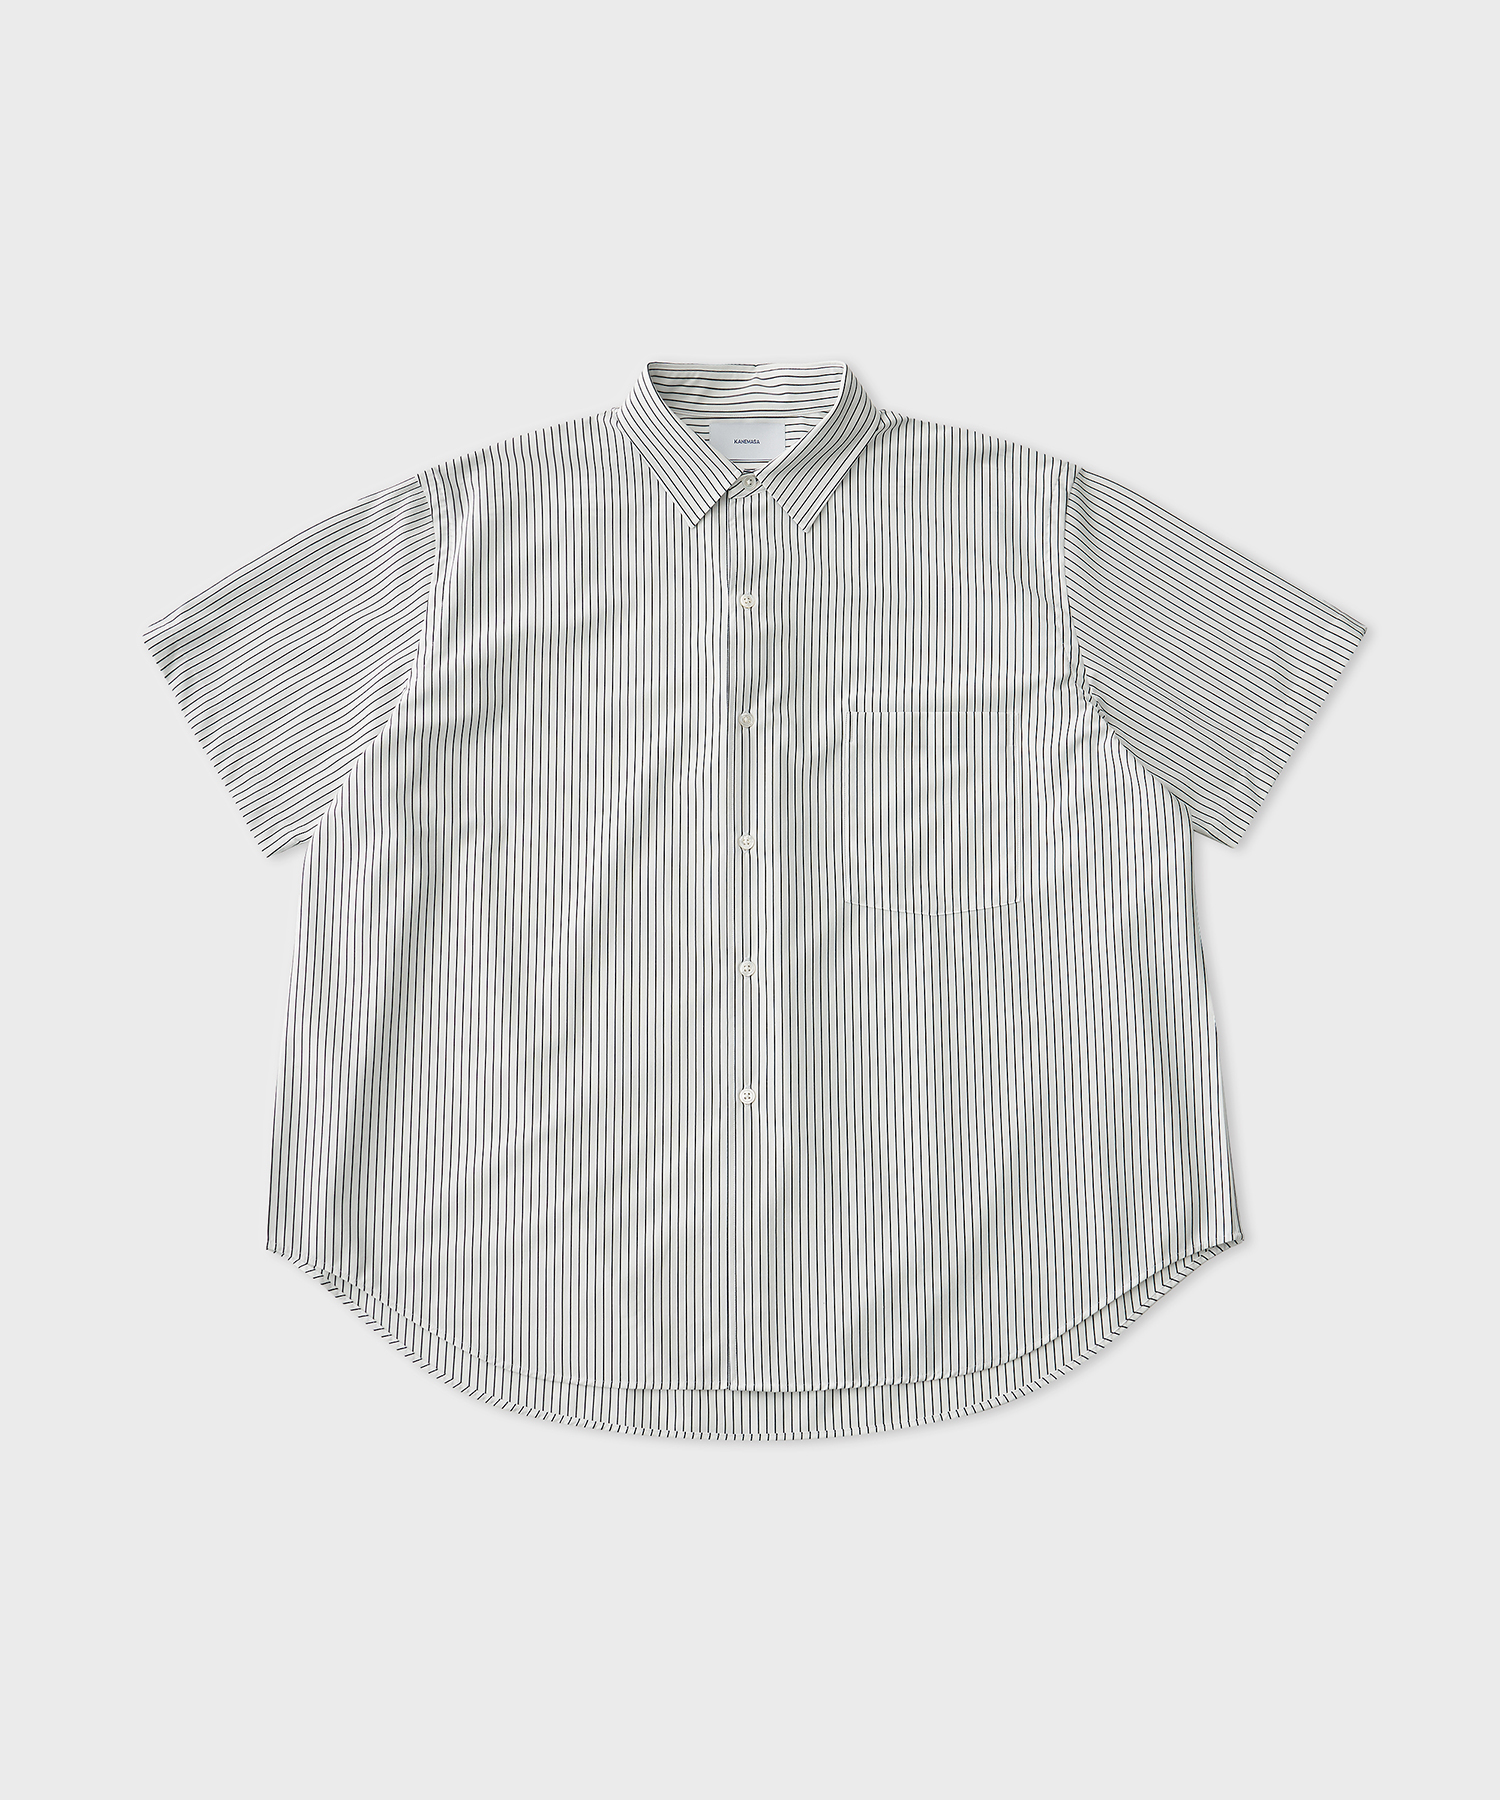 Pencil Stripe Dress Jersey Shirt Short Sleeve (White Navy)